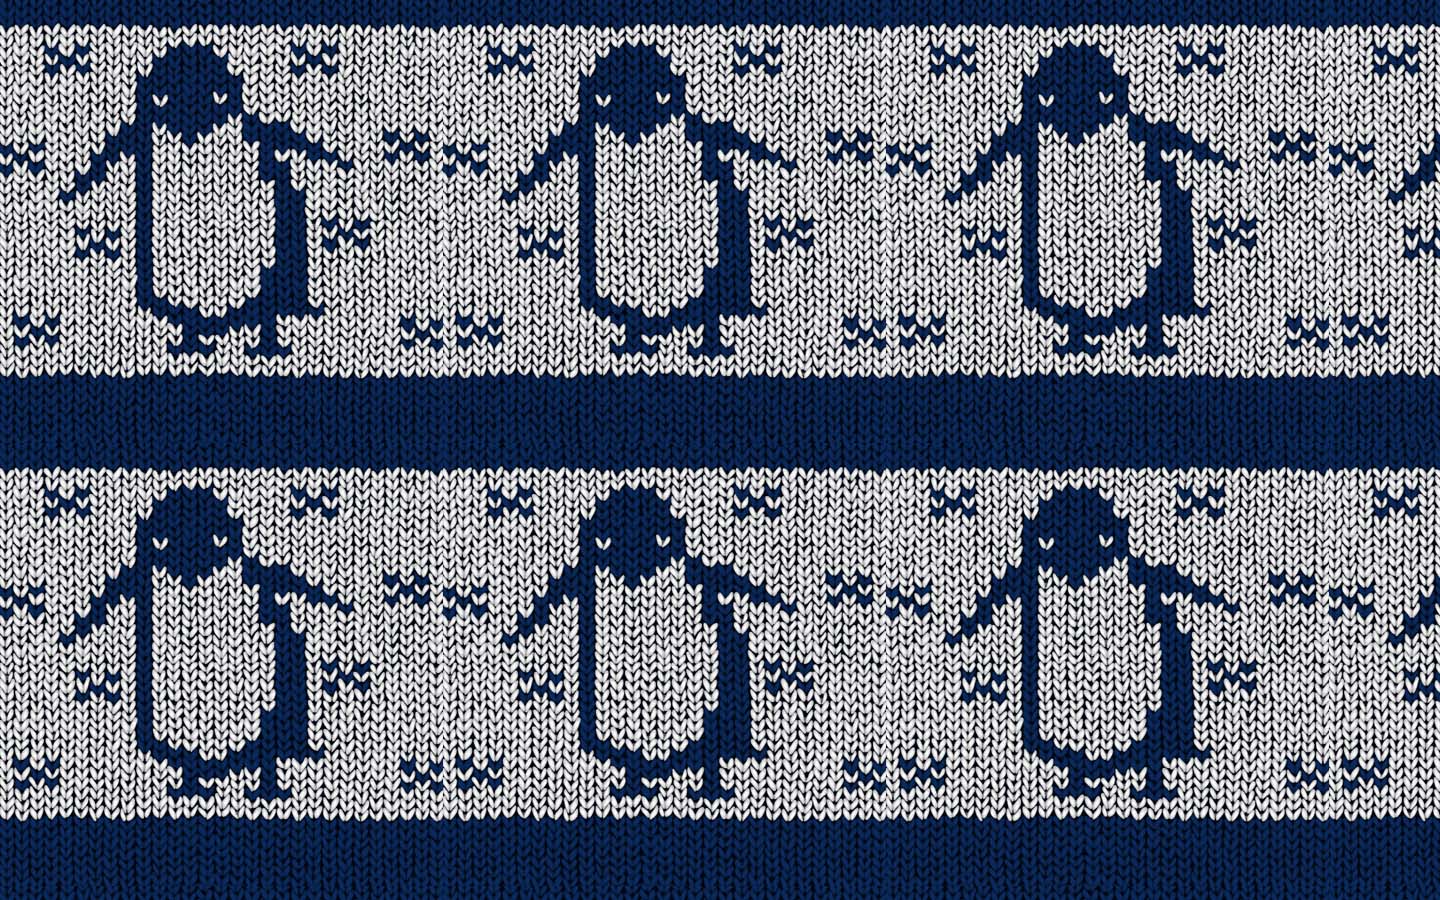 Penguin wool sweater wallpaper